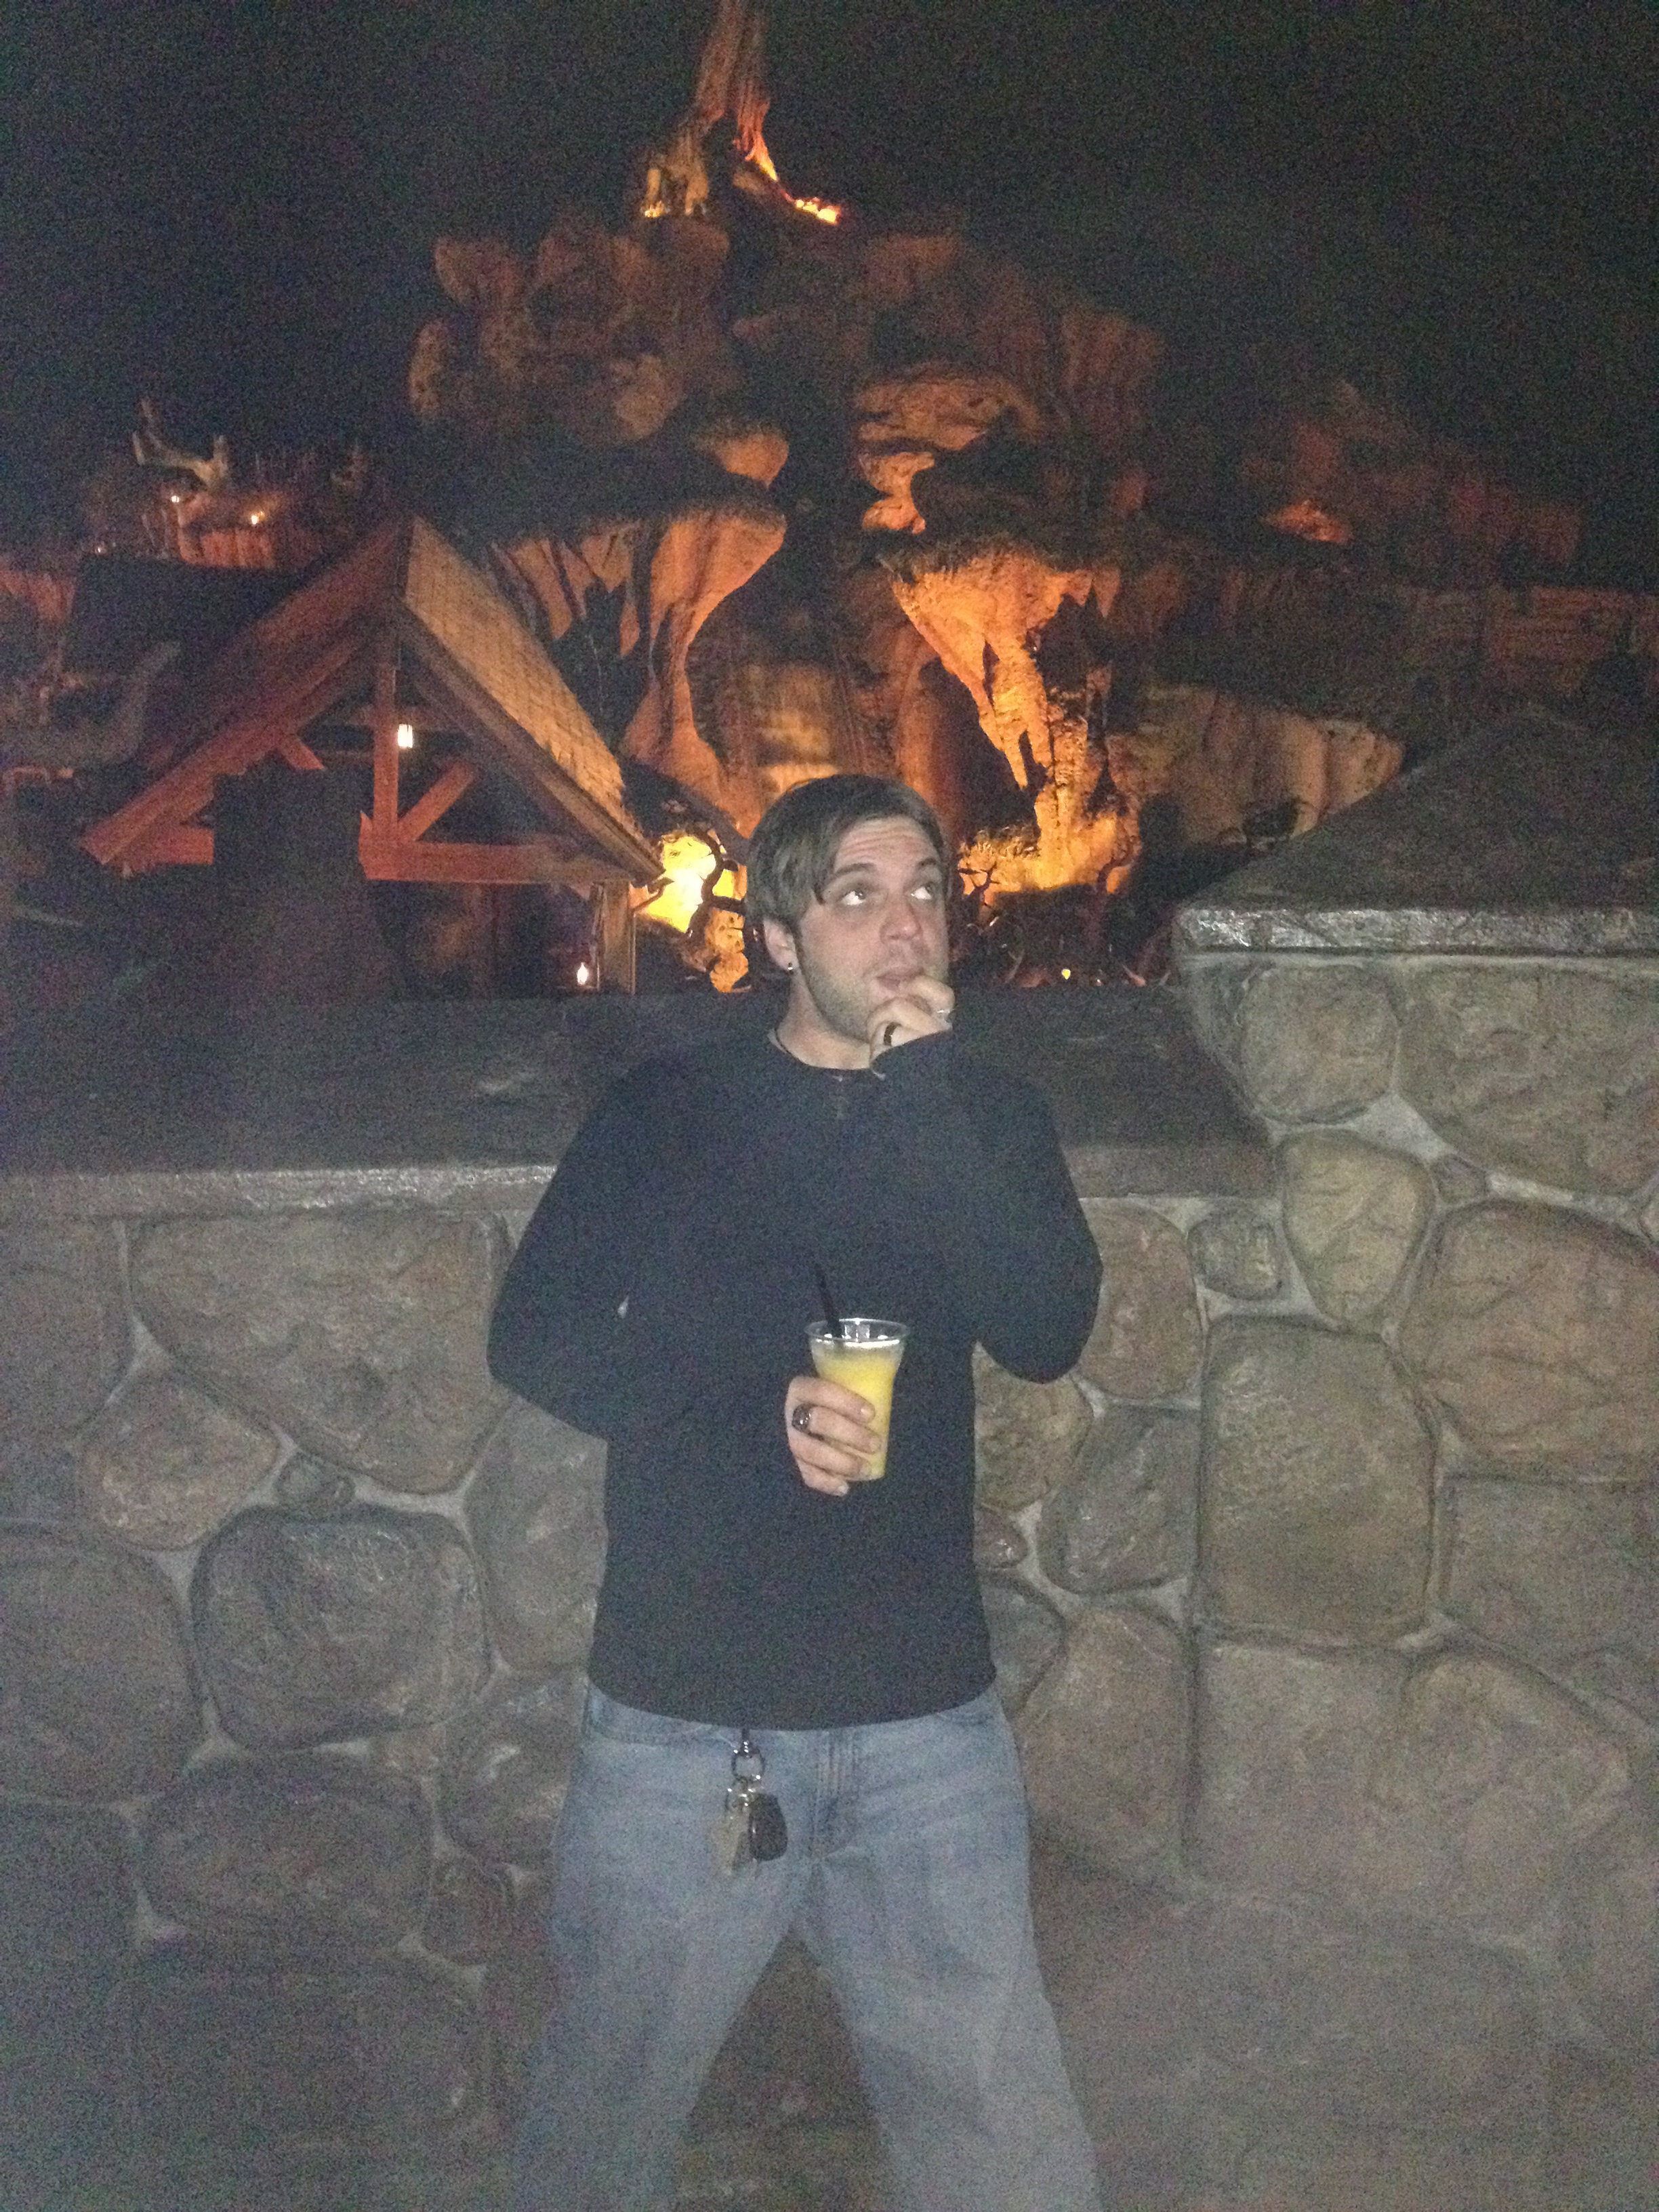 Anthony J. Preston at Disney's Magic Kingdom, Splash Mountain.